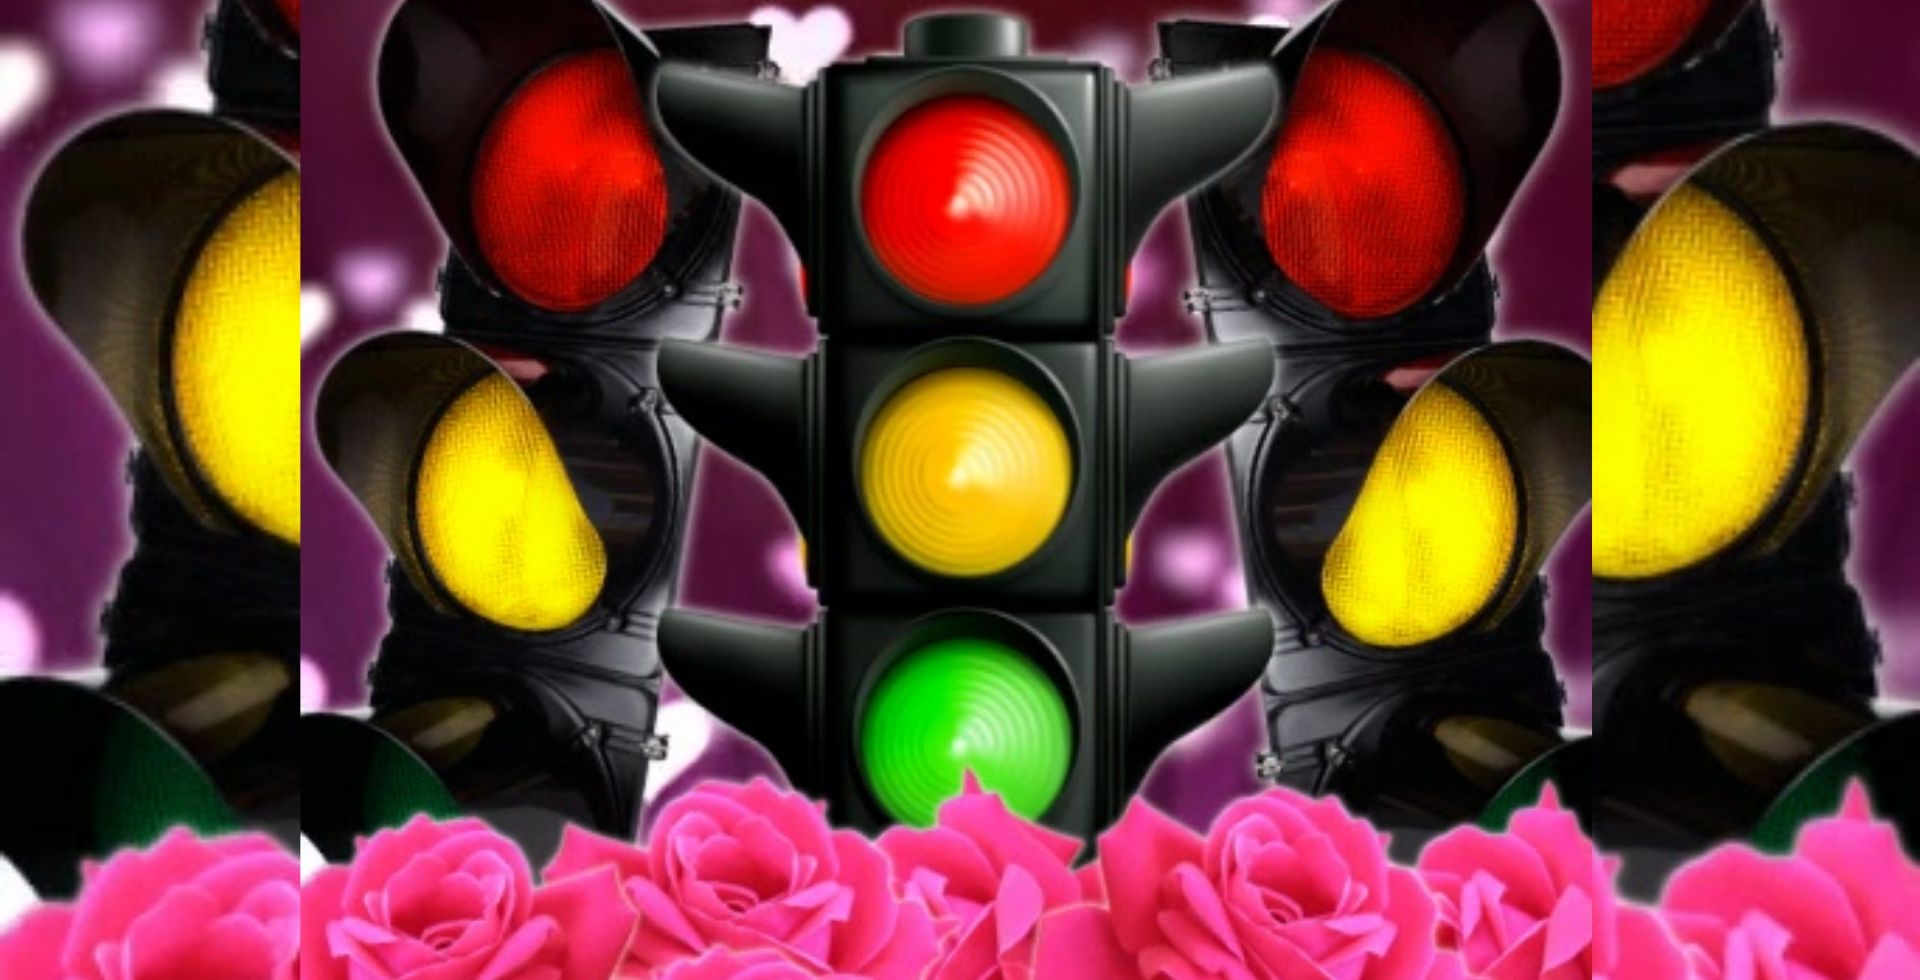 Traffic Lights Valentine's Edition